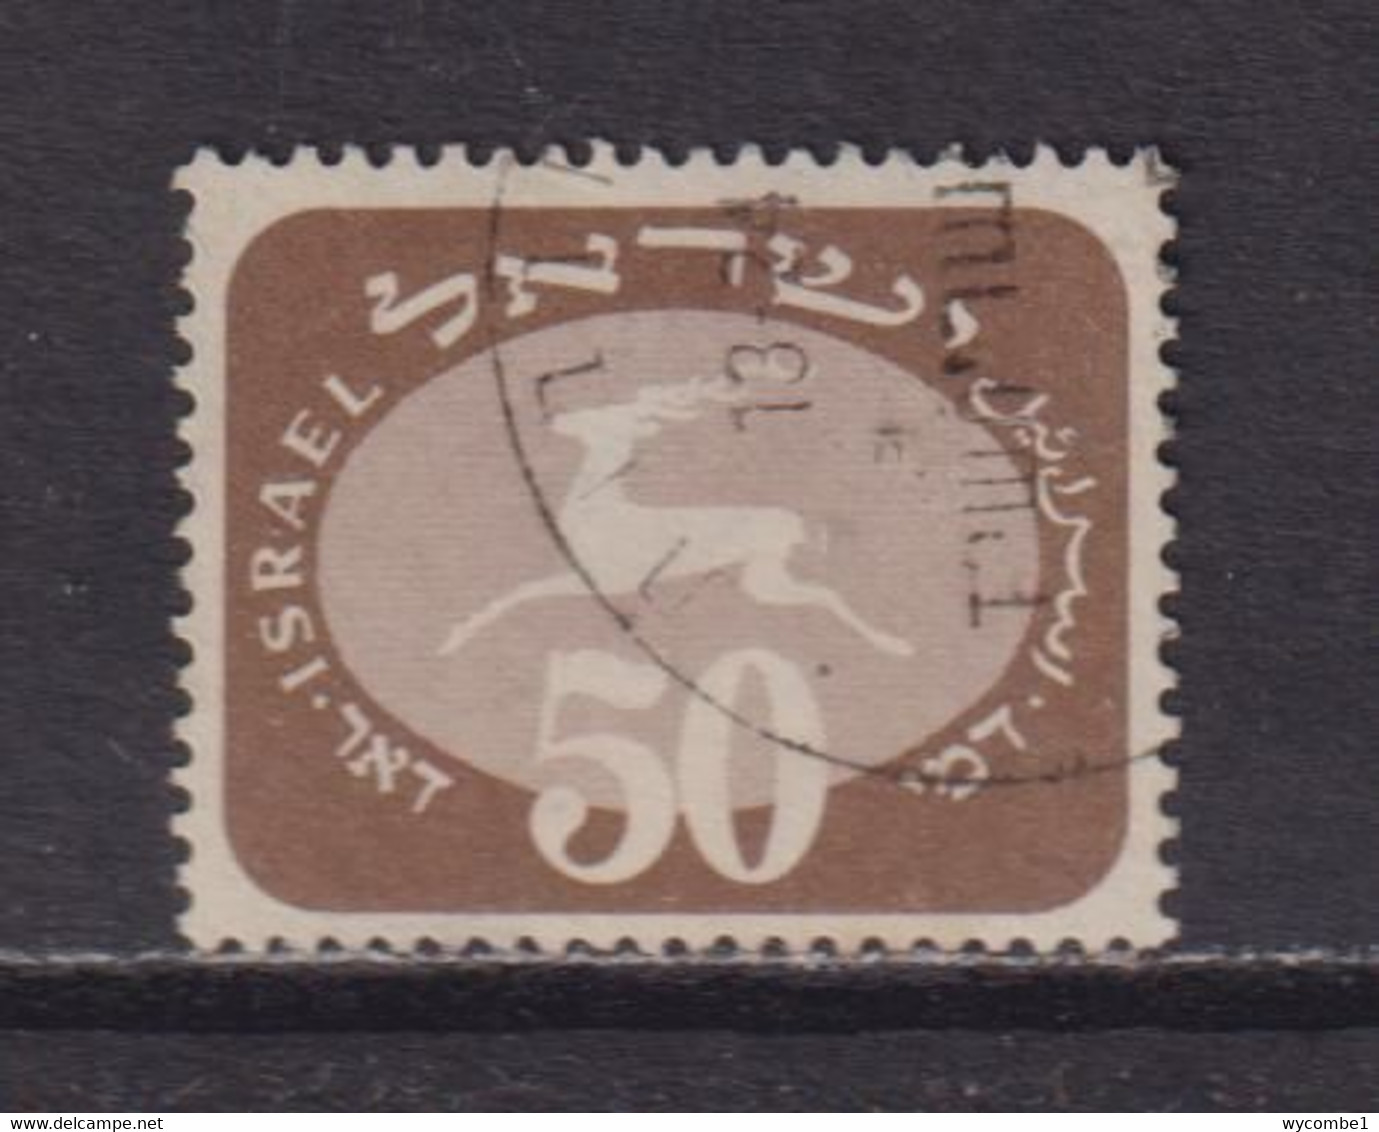 ISRAEL - 1952 Postage Due 50pr Used As Scan - Portomarken